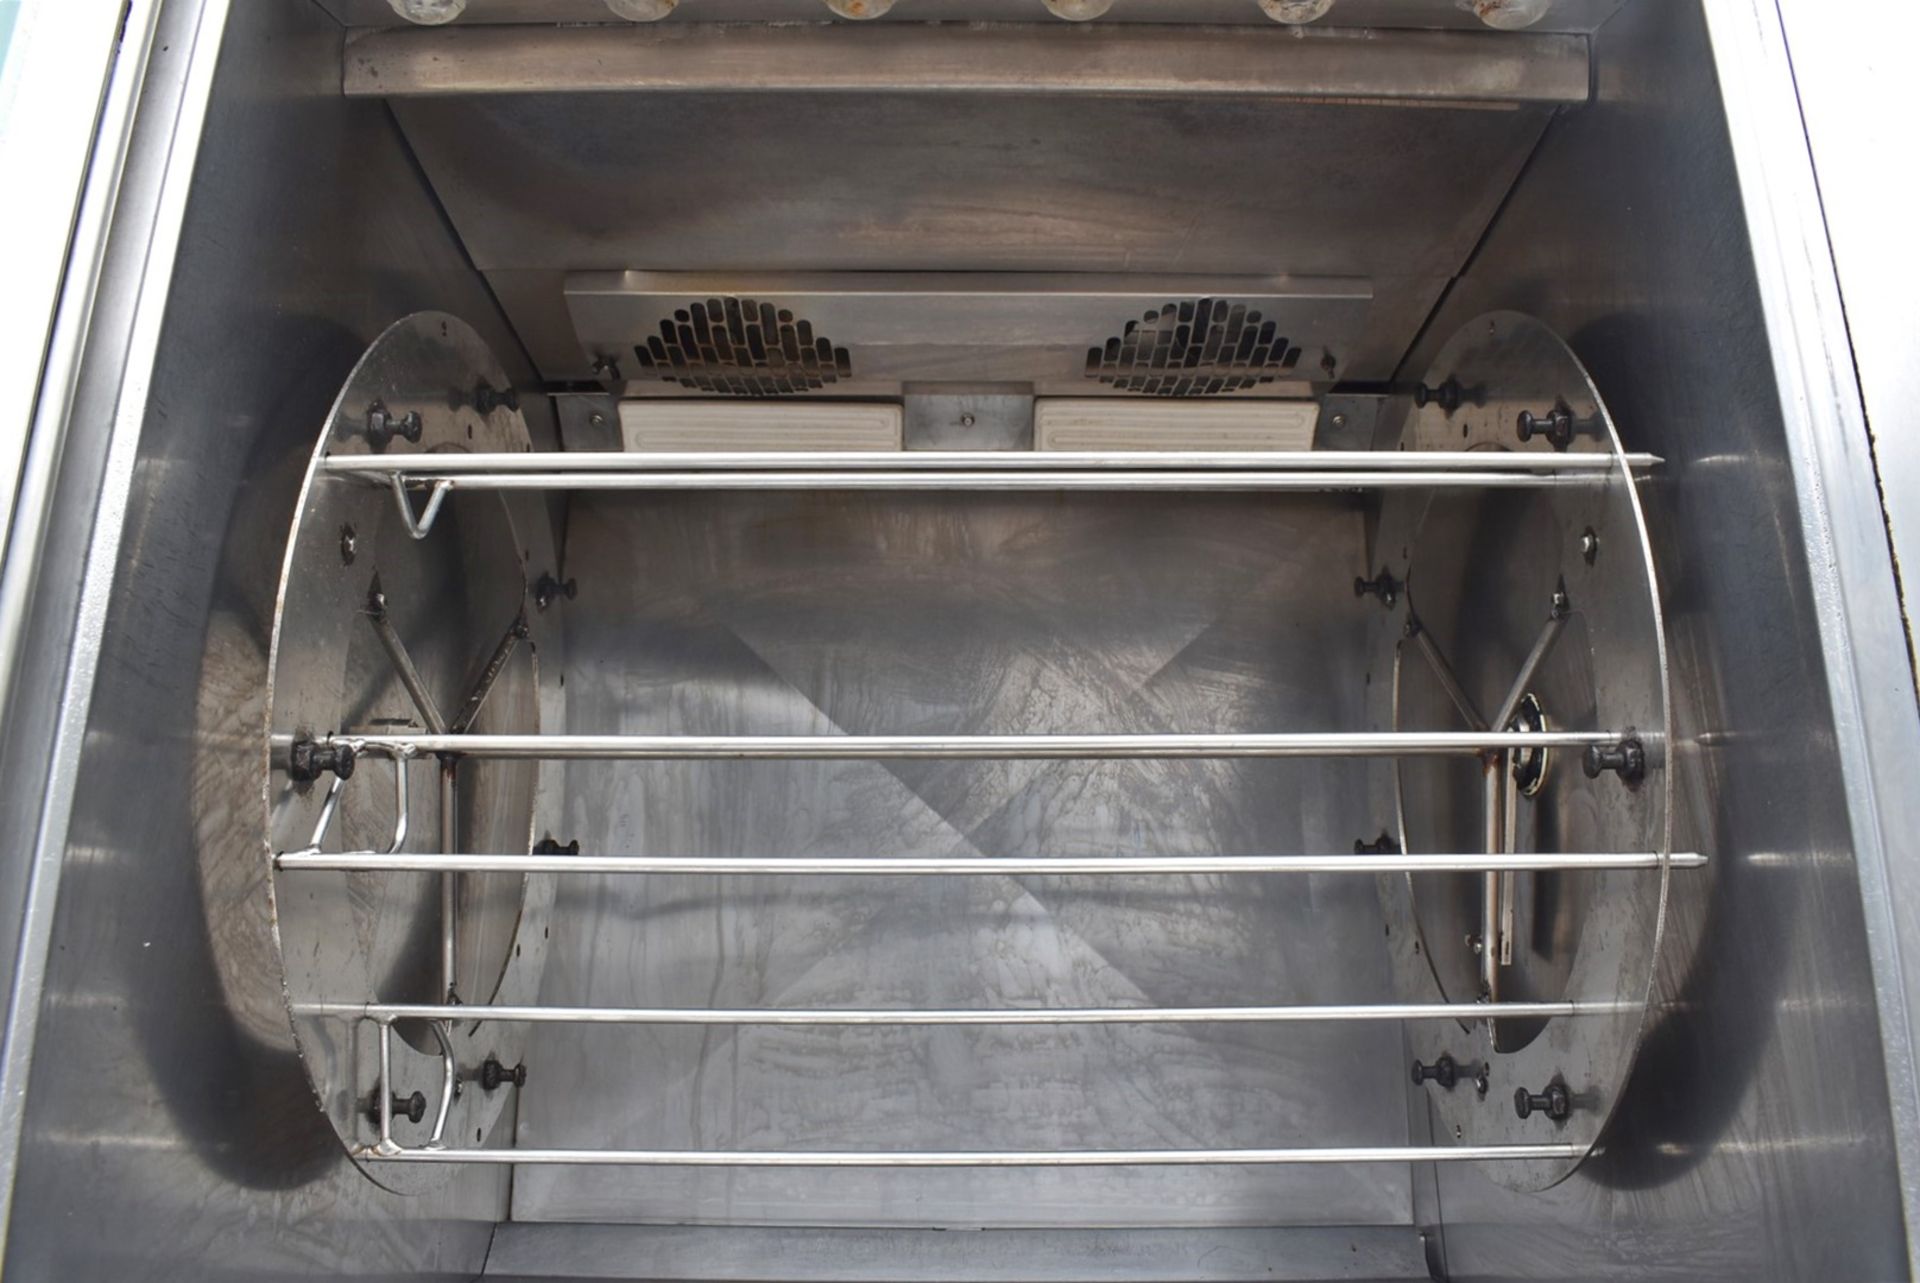 1 x Fri-Jado Rotisserie Chicken Double Oven - 3 Phase Power - Ref: JON231 - CL232 - Location: - Image 5 of 16